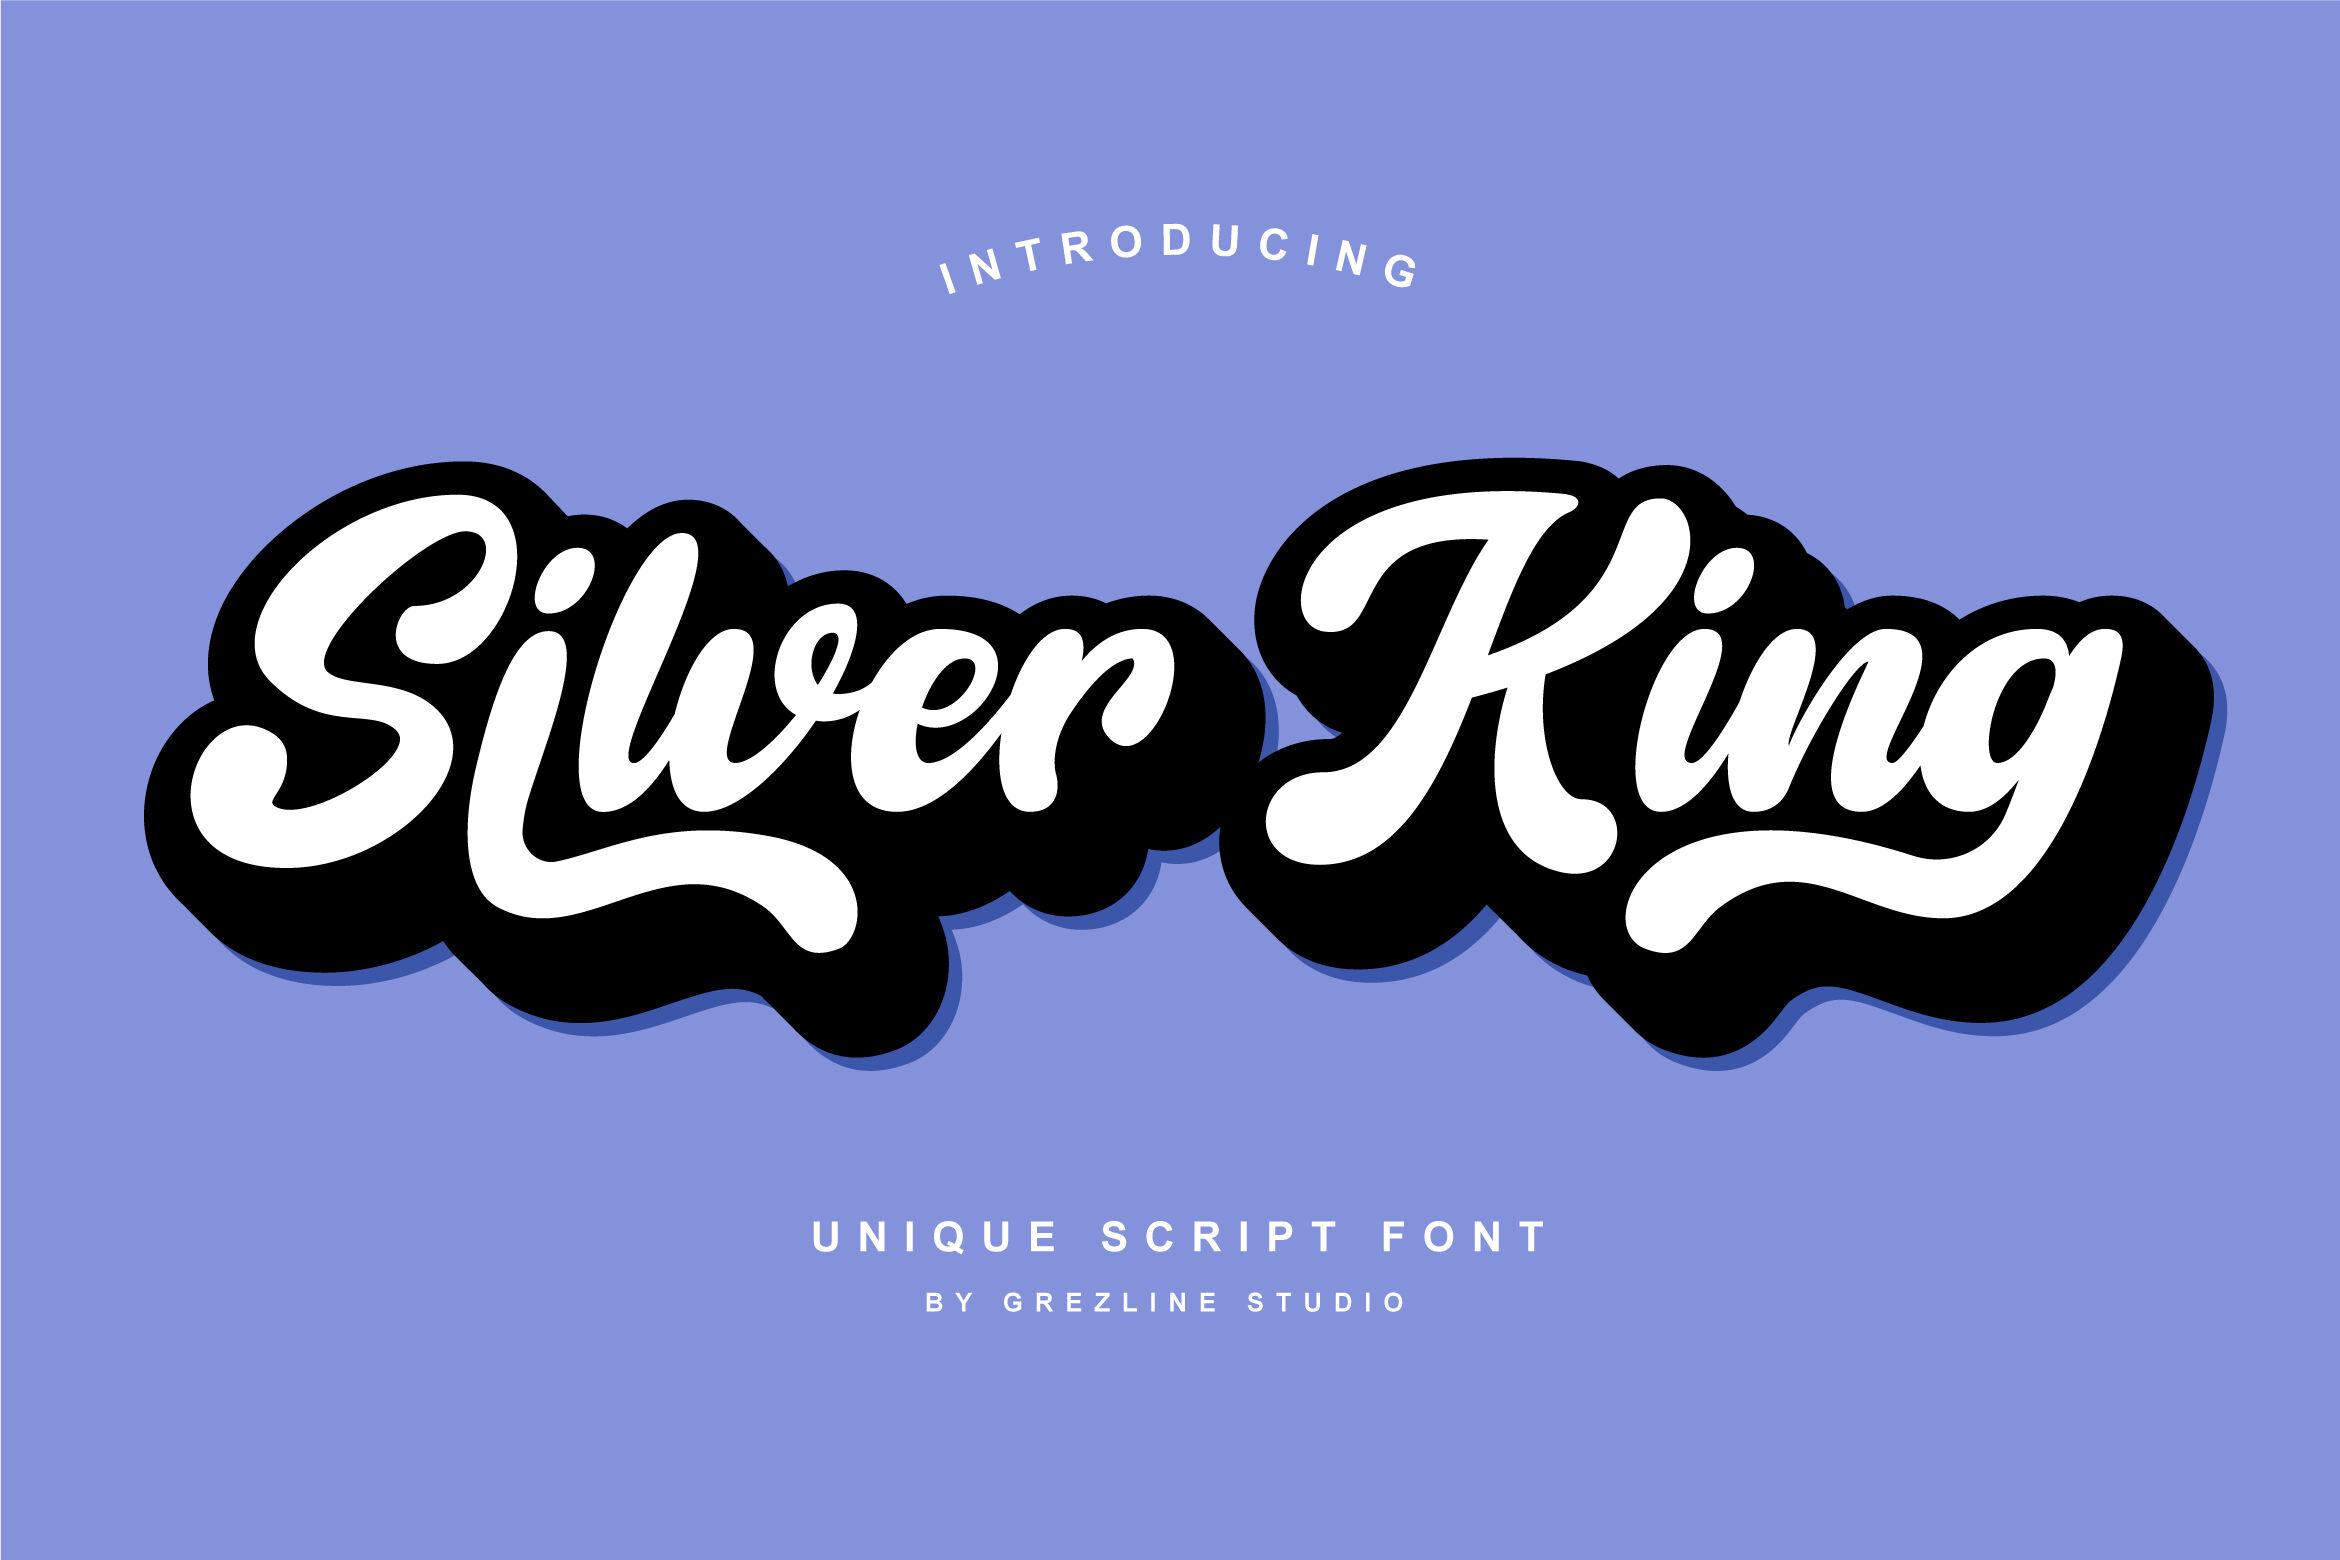 Silver King Script Font By Grezline Studio Thehungryjpeg Com